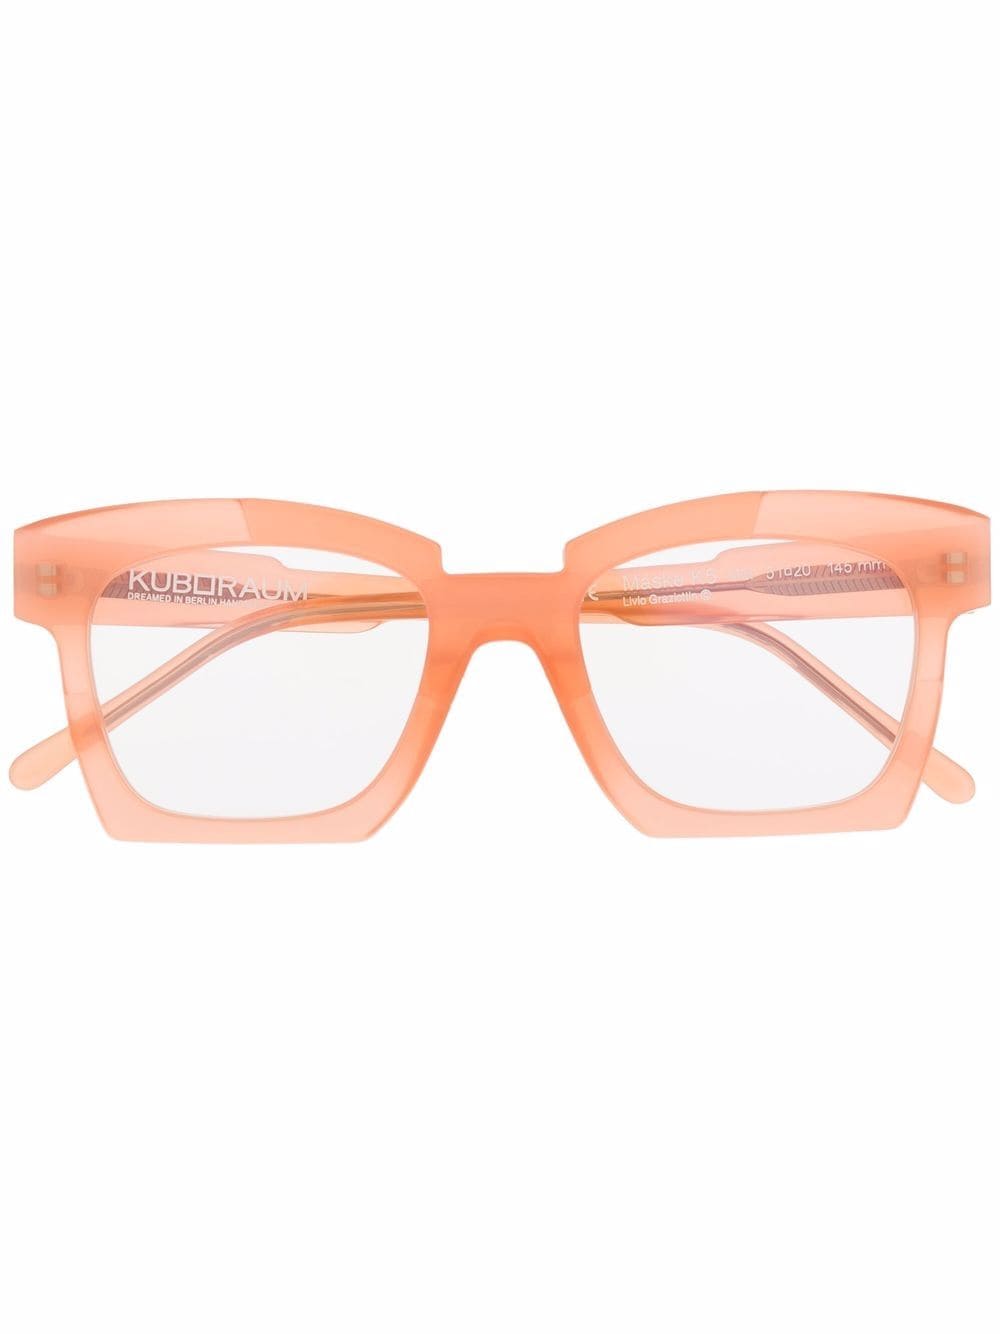 Kuboraum K5 square-frame glasses - Pink von Kuboraum